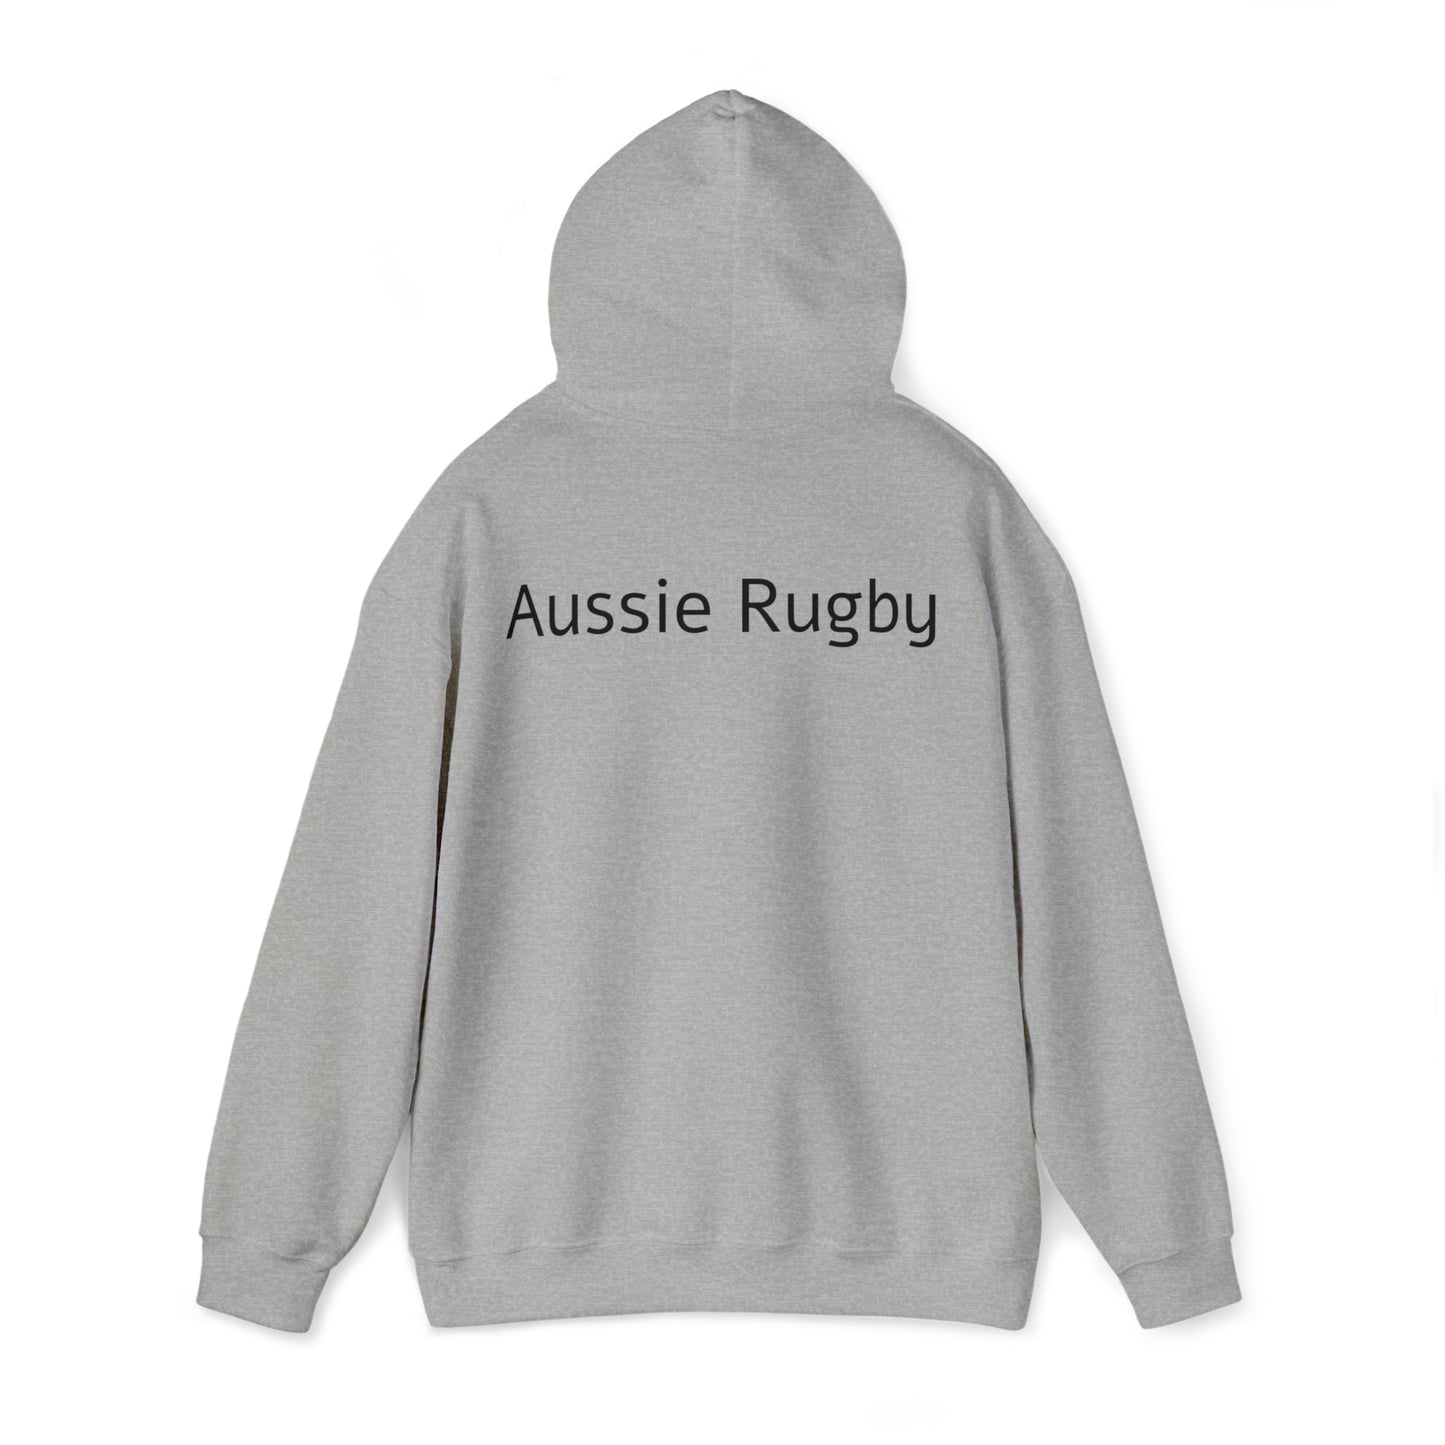 Ready Australia - light hoodies